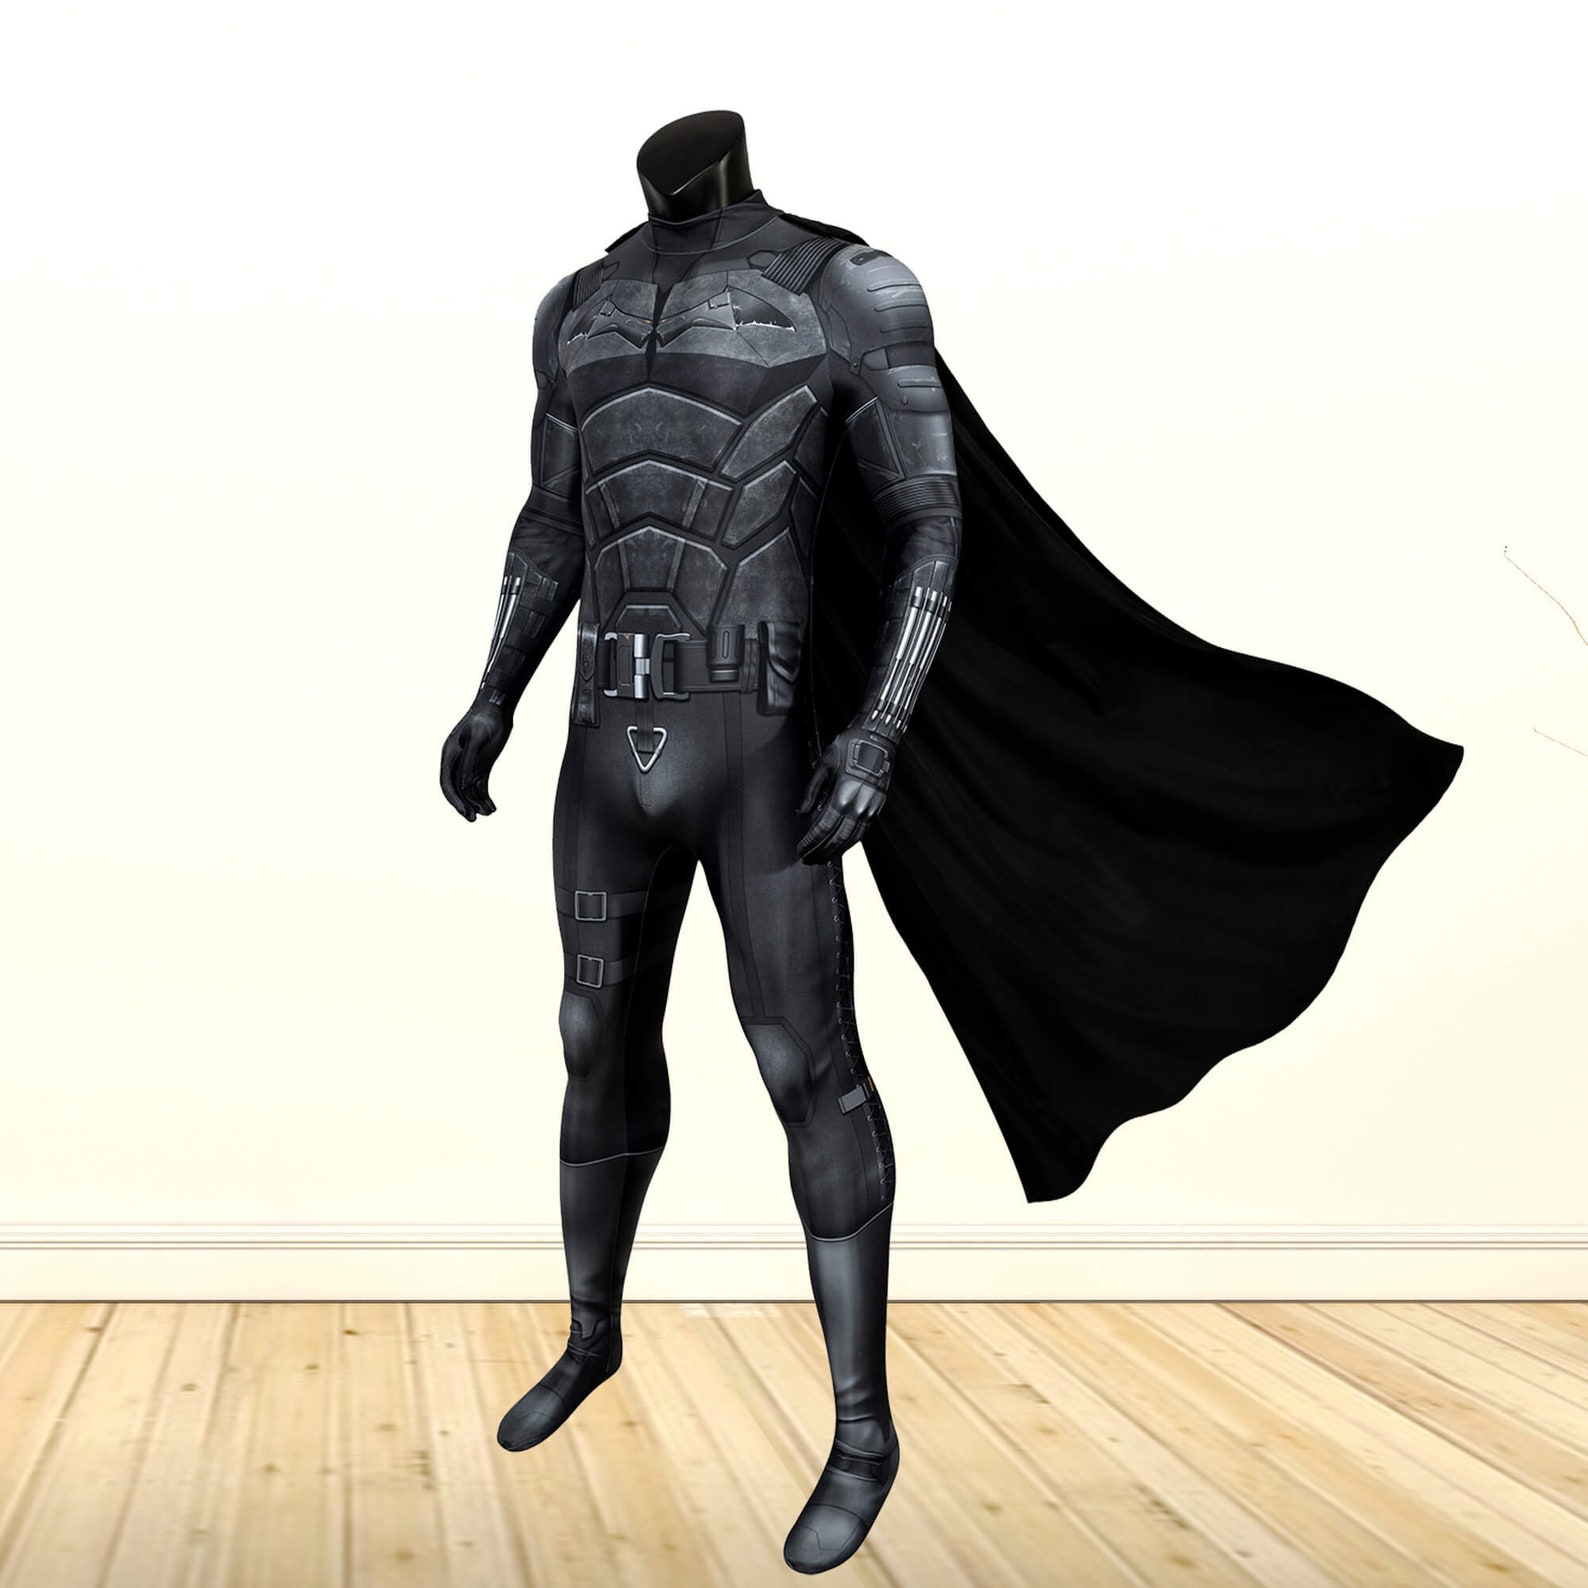 Batman costume etsy